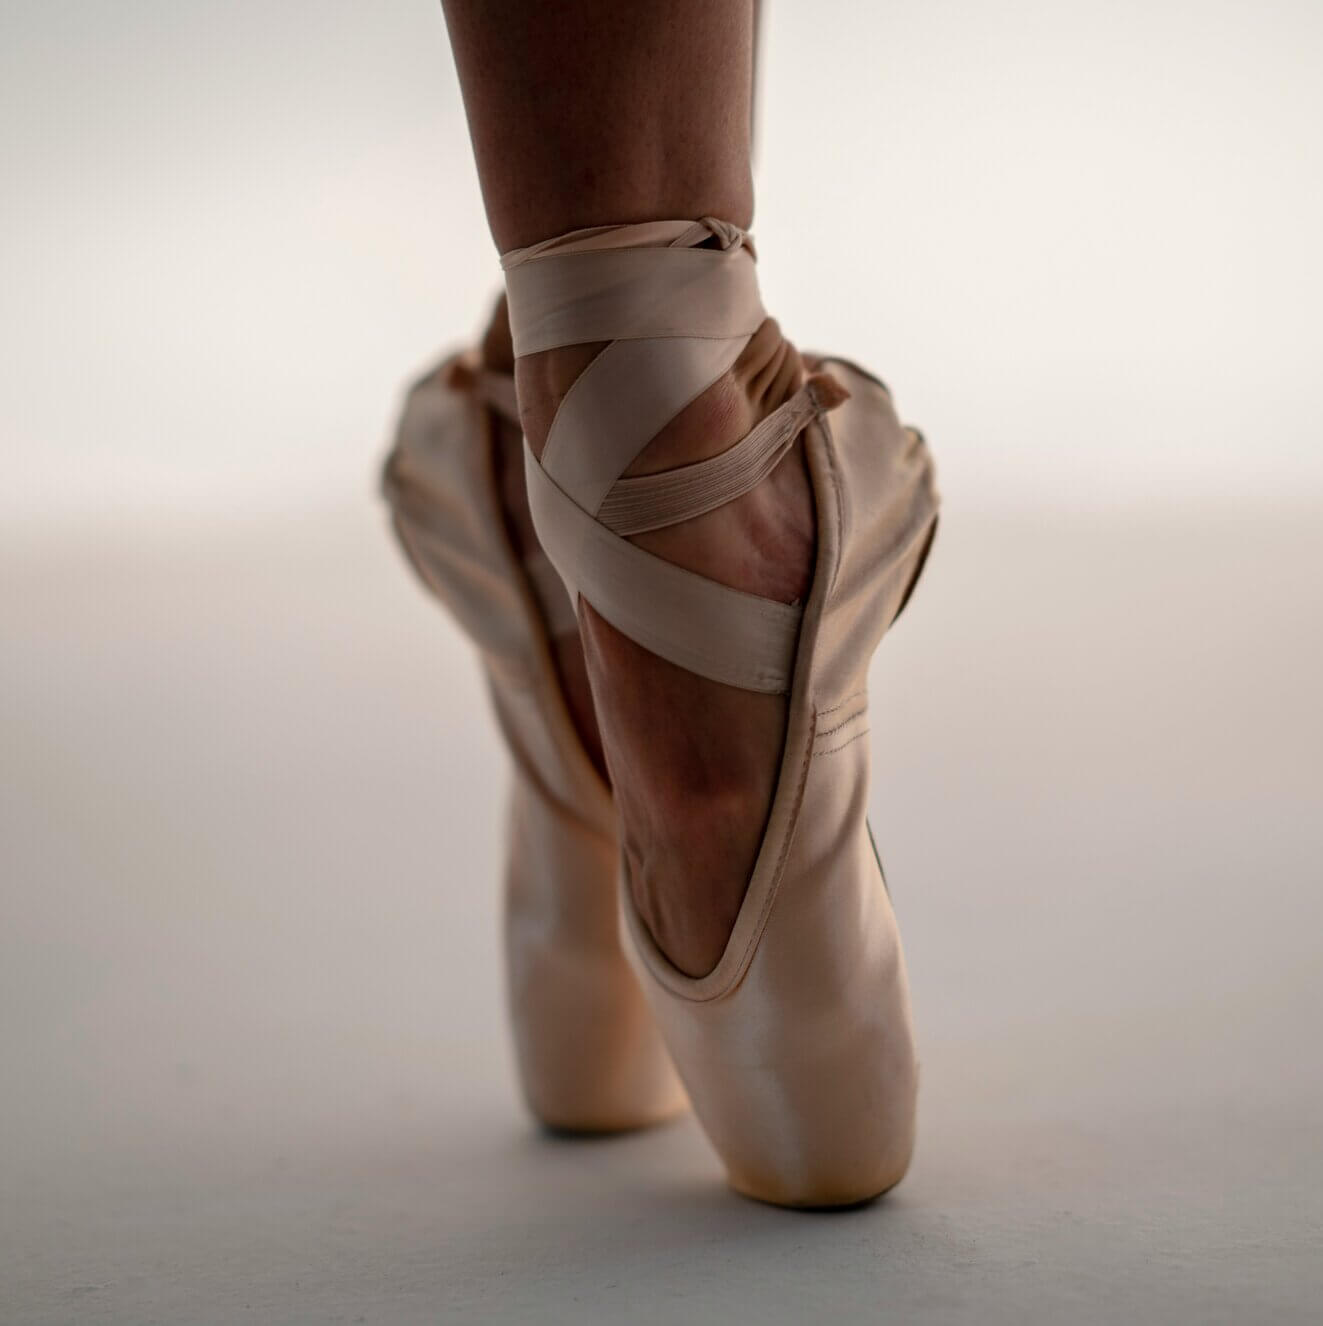 Ballet dancer's feet, on toes.